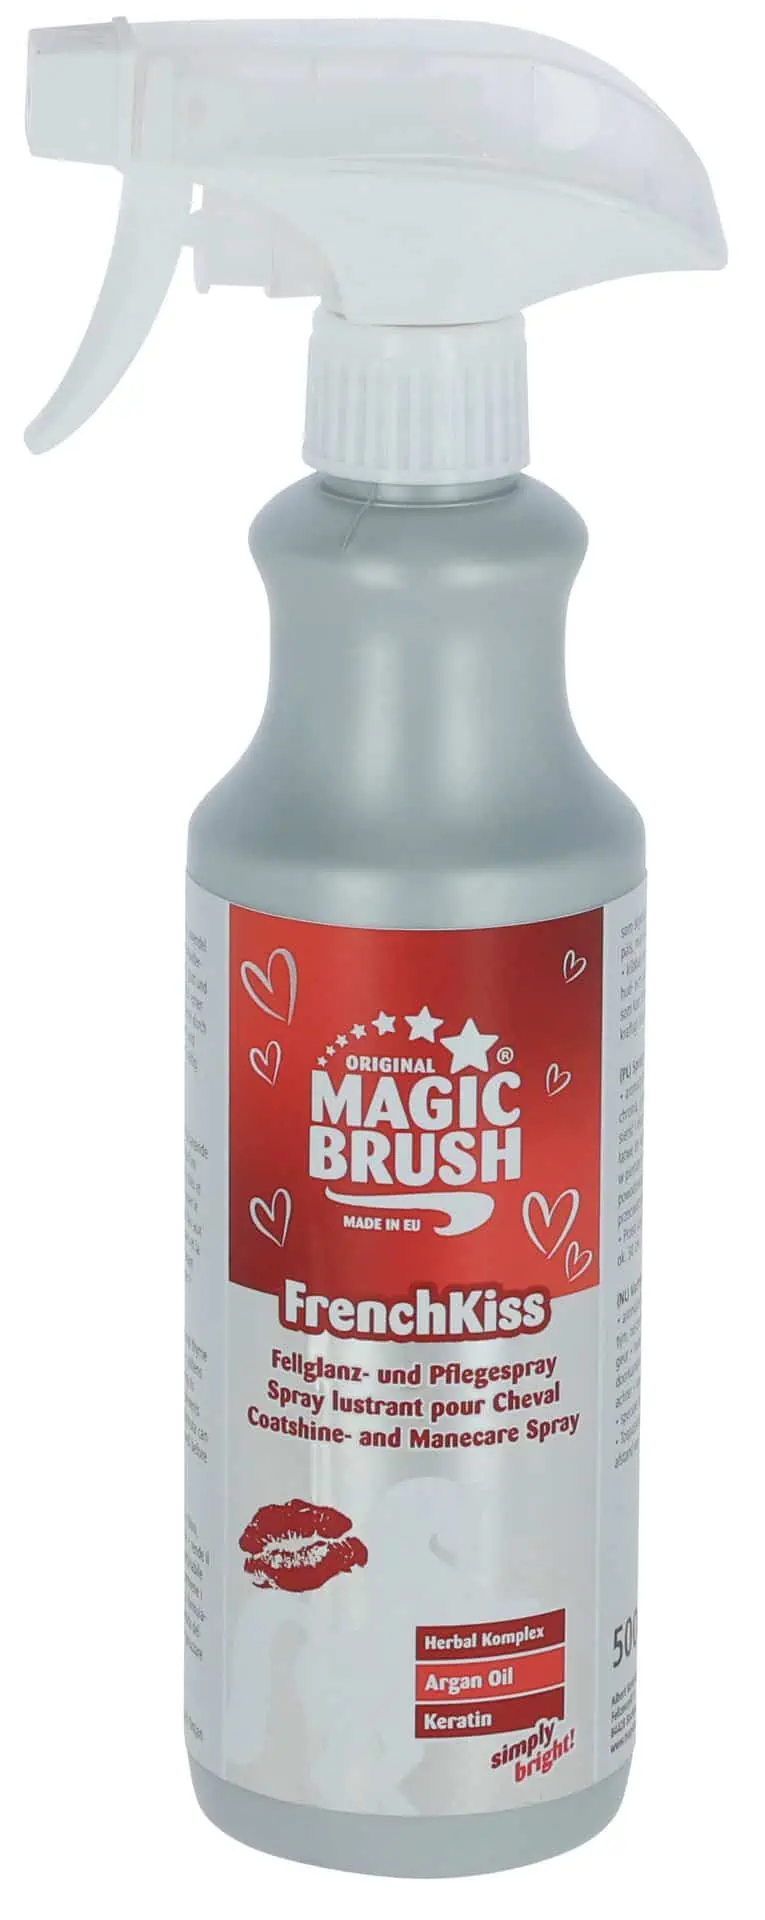 ManeCare Premium French Kiss Fellglanzspray 500 ml